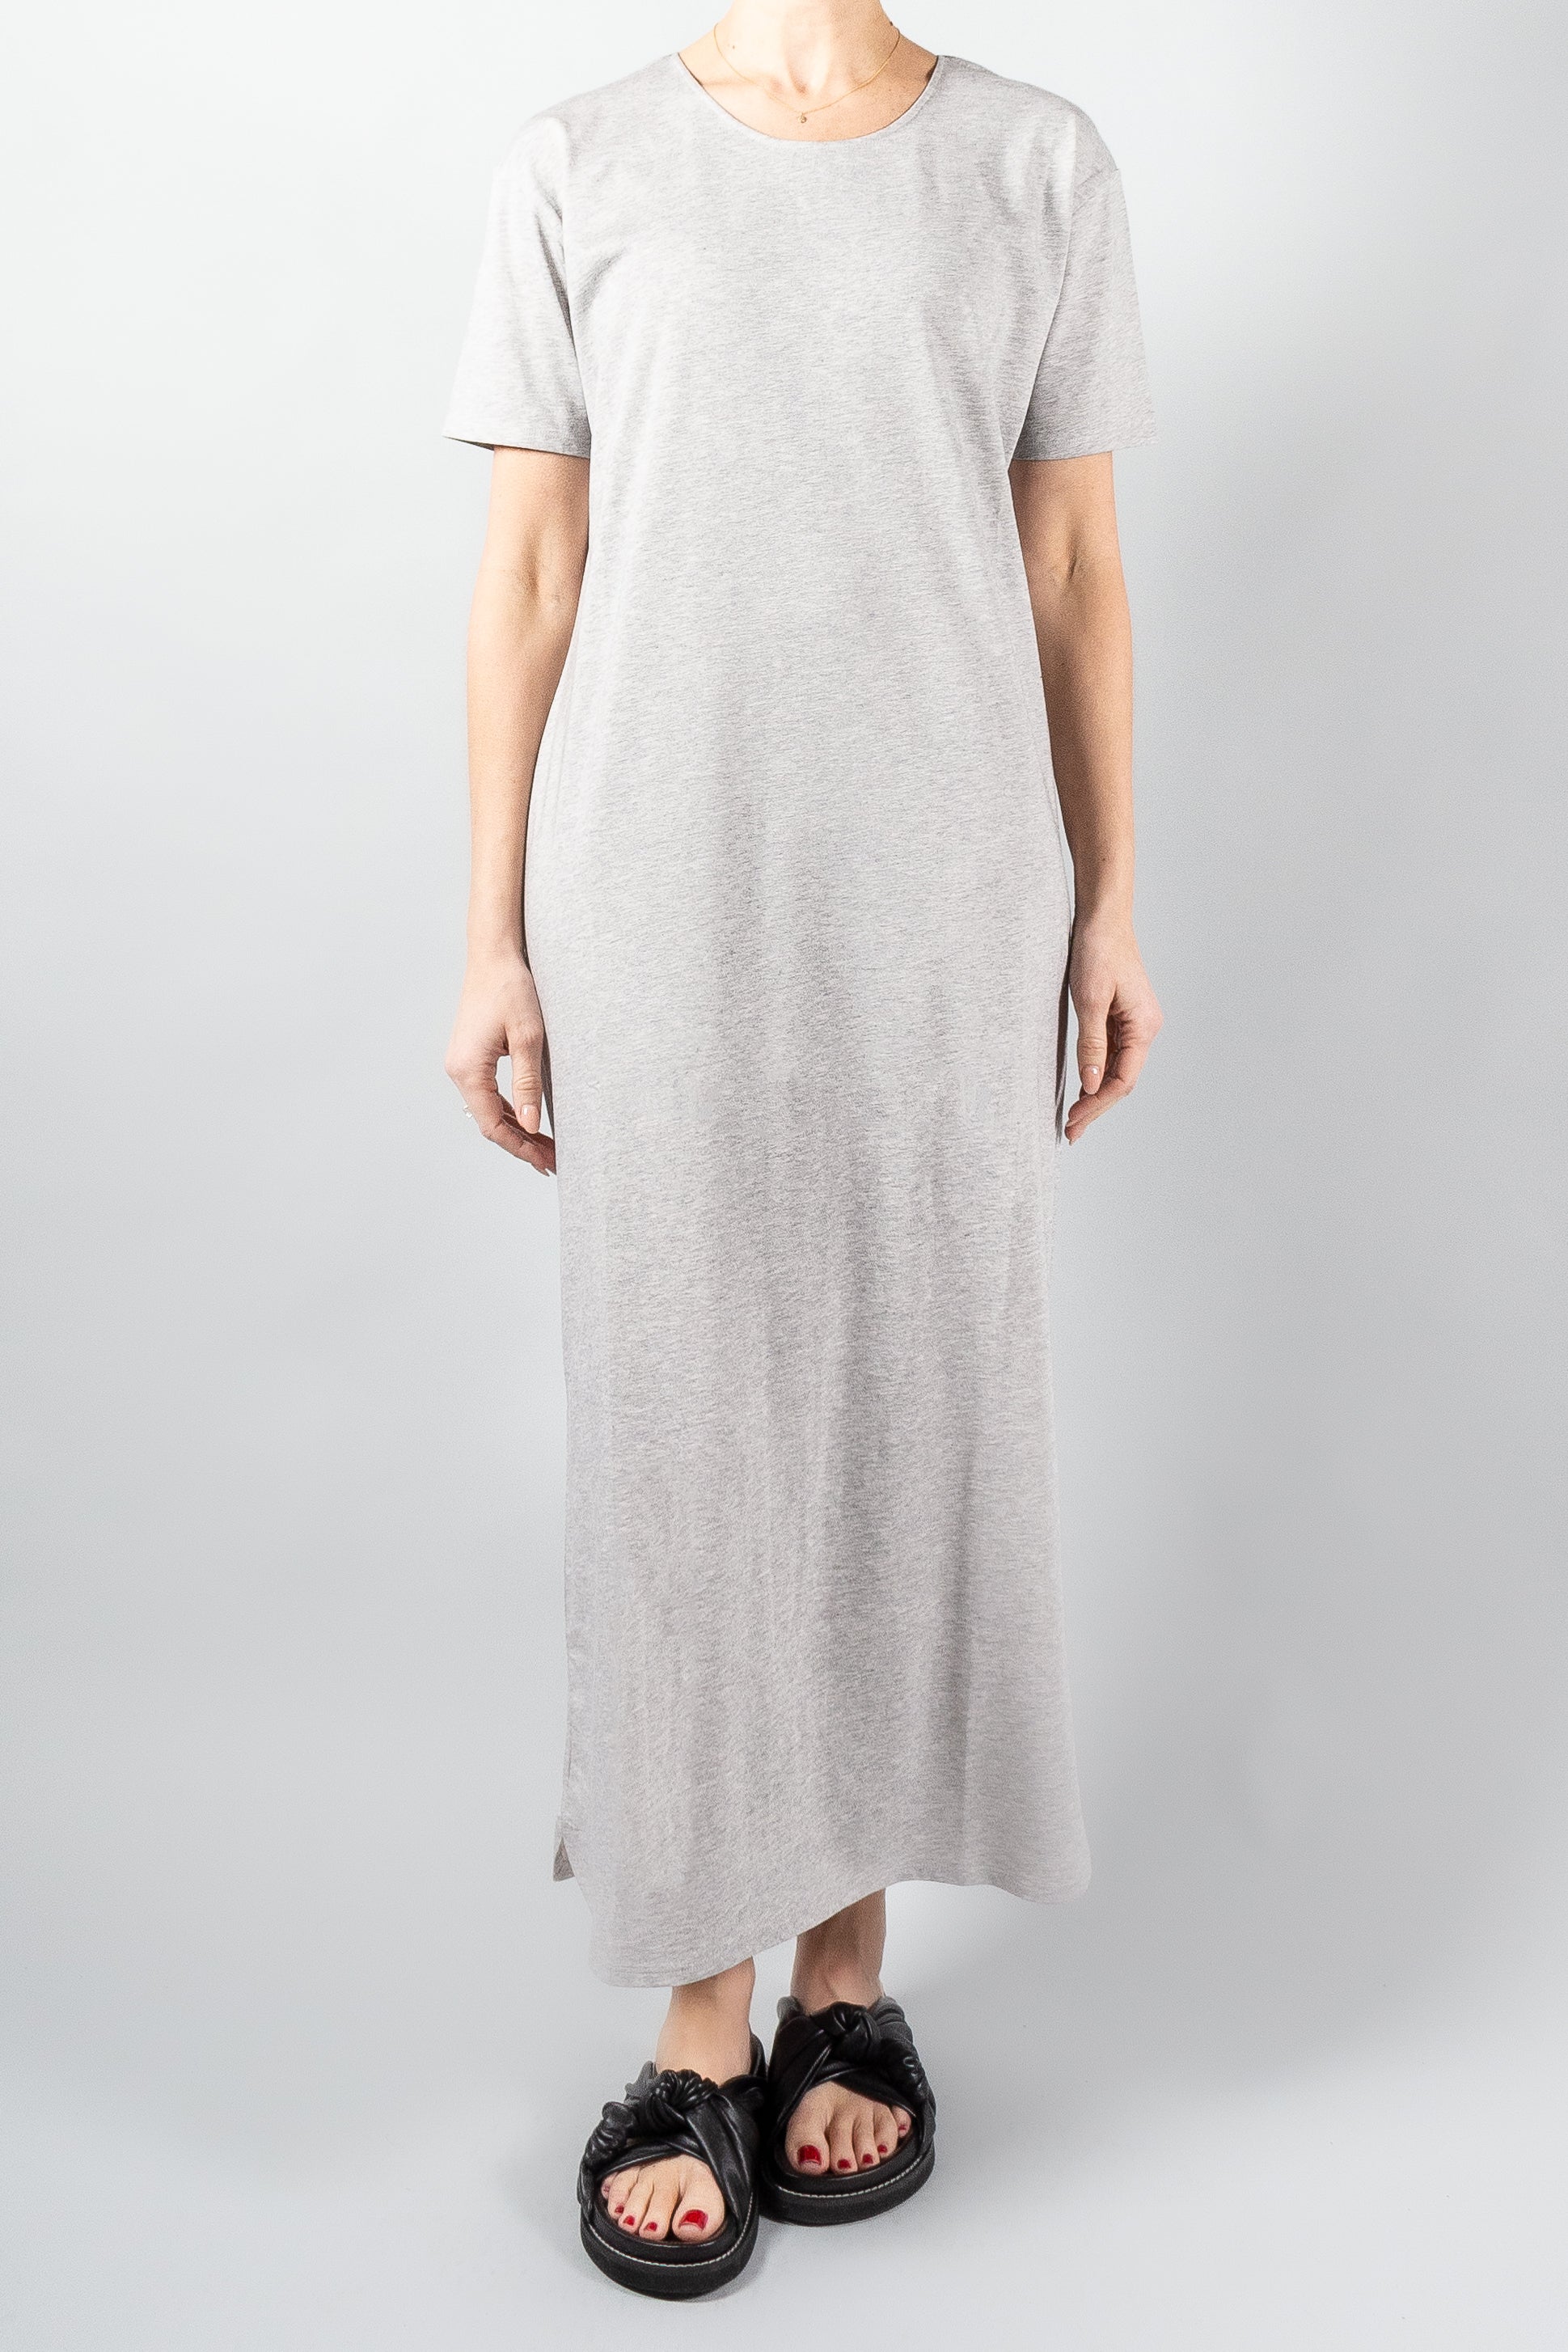 Loulou Studio Arue Cotton Dress-Dresses and Jumsuits-Misch-Boutique-Vancouver-Canada-misch.ca